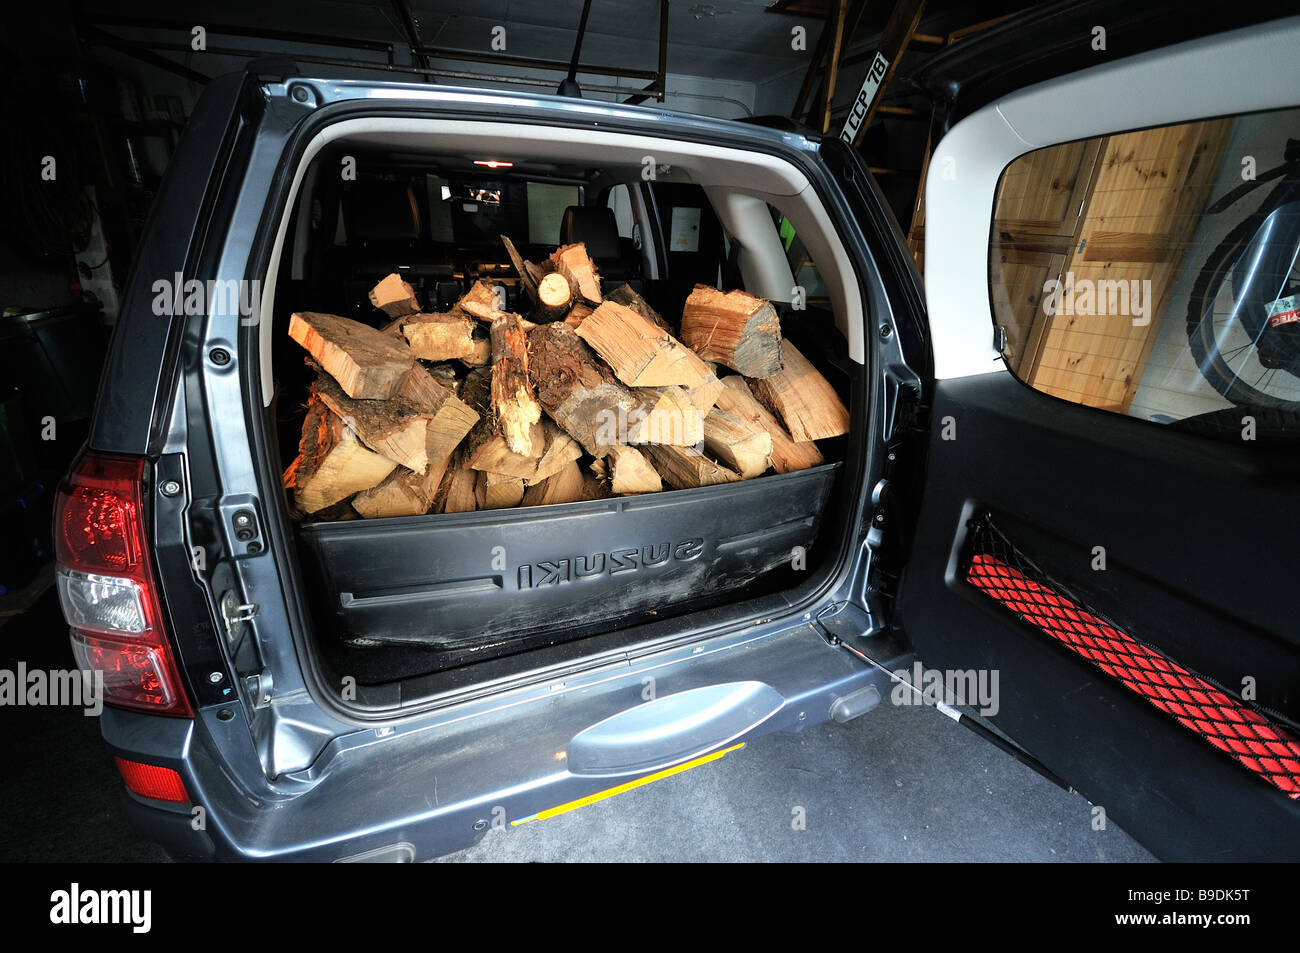 Suzuki Grand Vitara loaded with fireplace wood Stock Photo